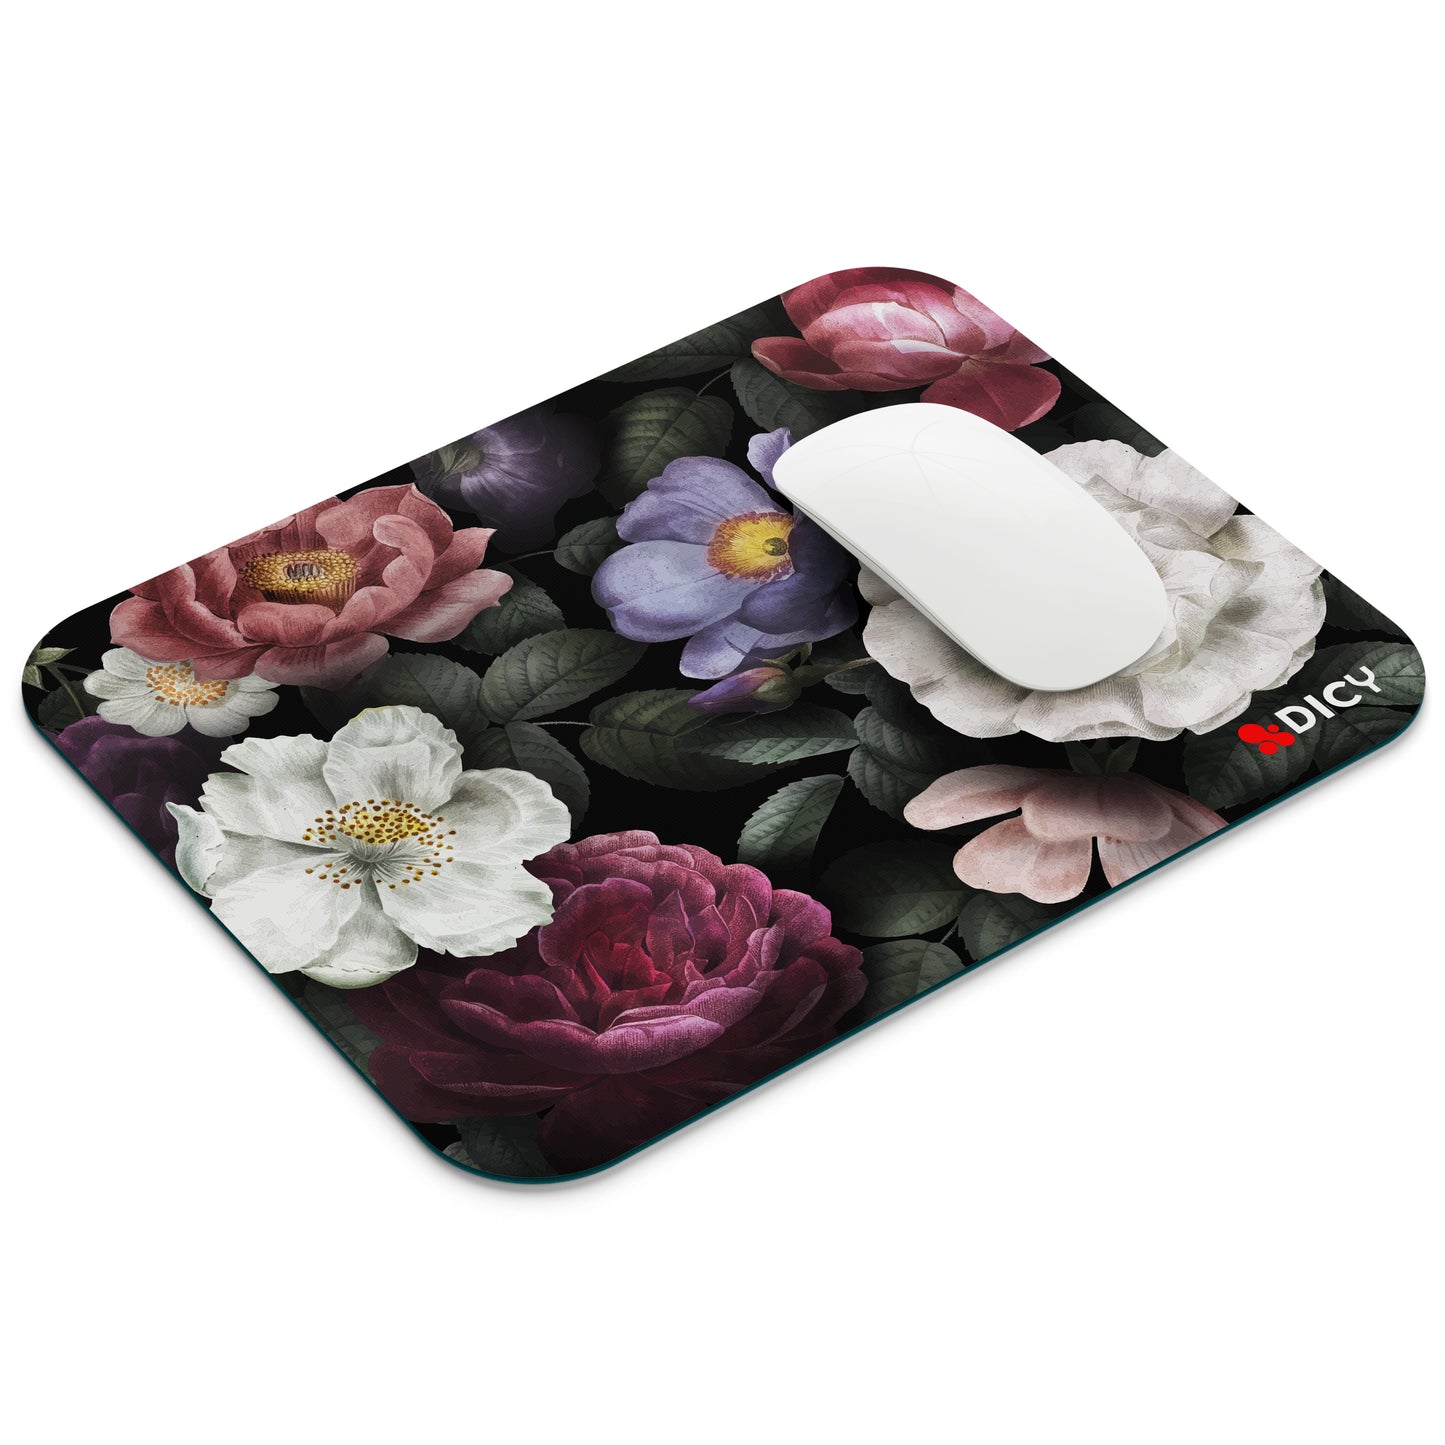 Mouse Pad for Laptop Desktop PC | Beautiful flower patterns